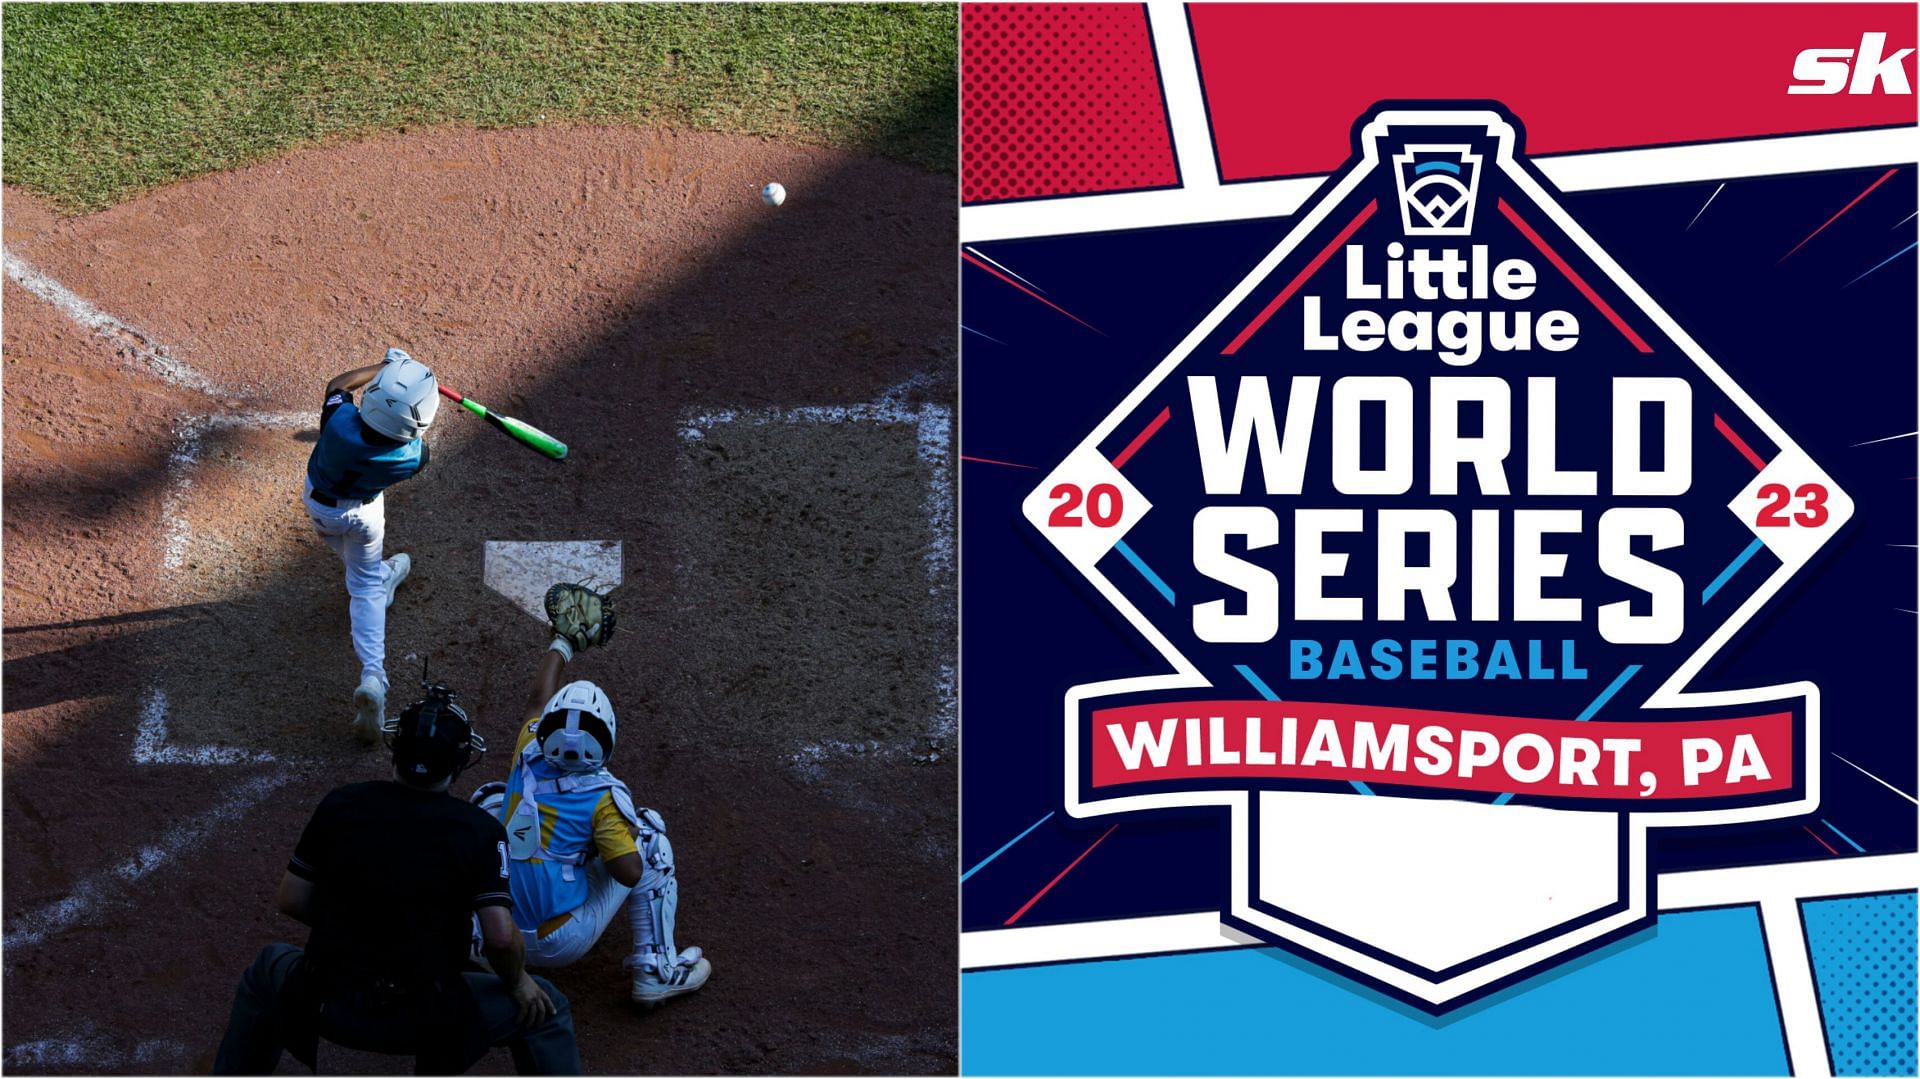 How to Watch Pennsylvania vs Washington, DC Little League World Series